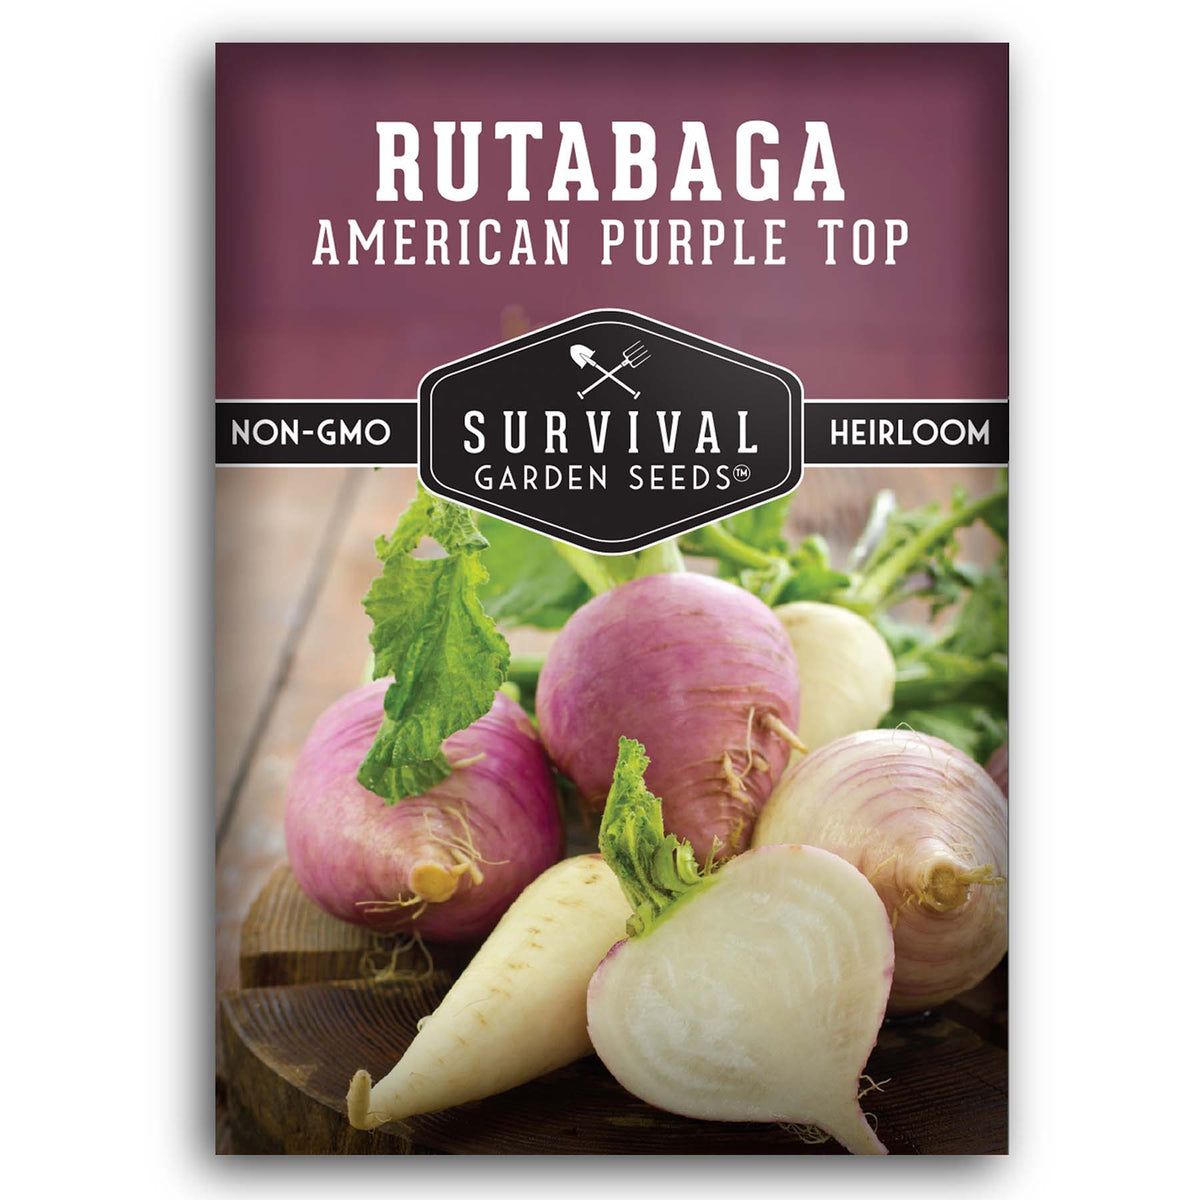 American Purple Top Rutabaga seeds for planting